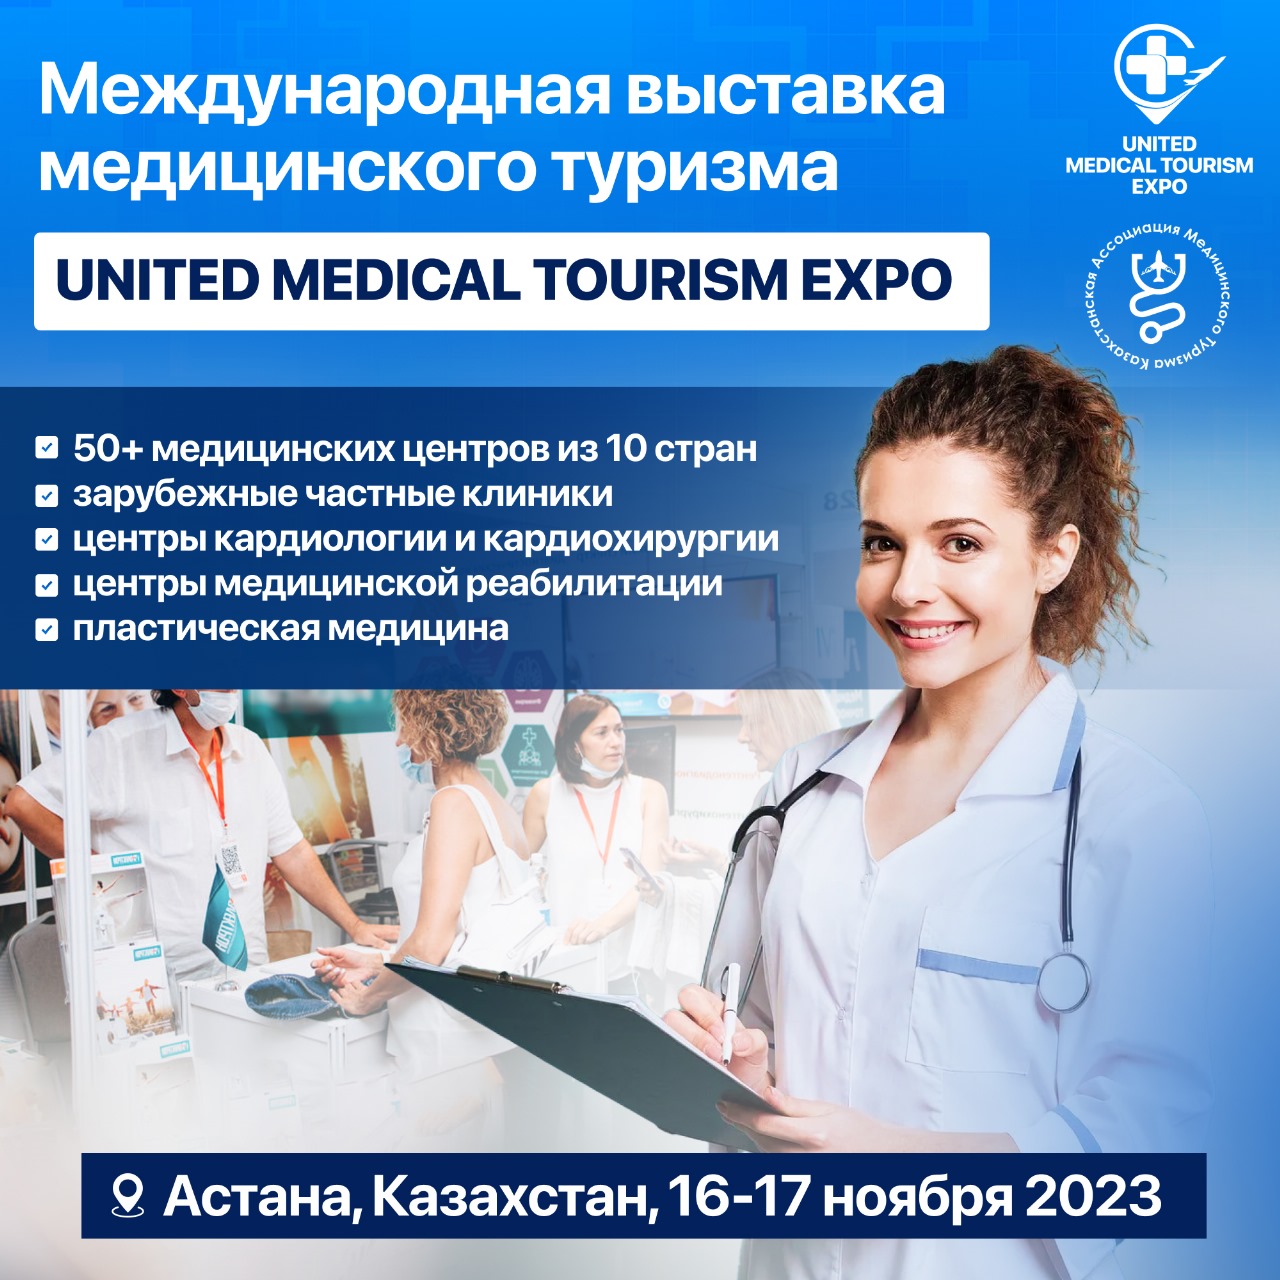 В МВЦ EXPO пройдёт выставка медицинского туризма UNITED MEDICAL TOURISM EXPO 2023